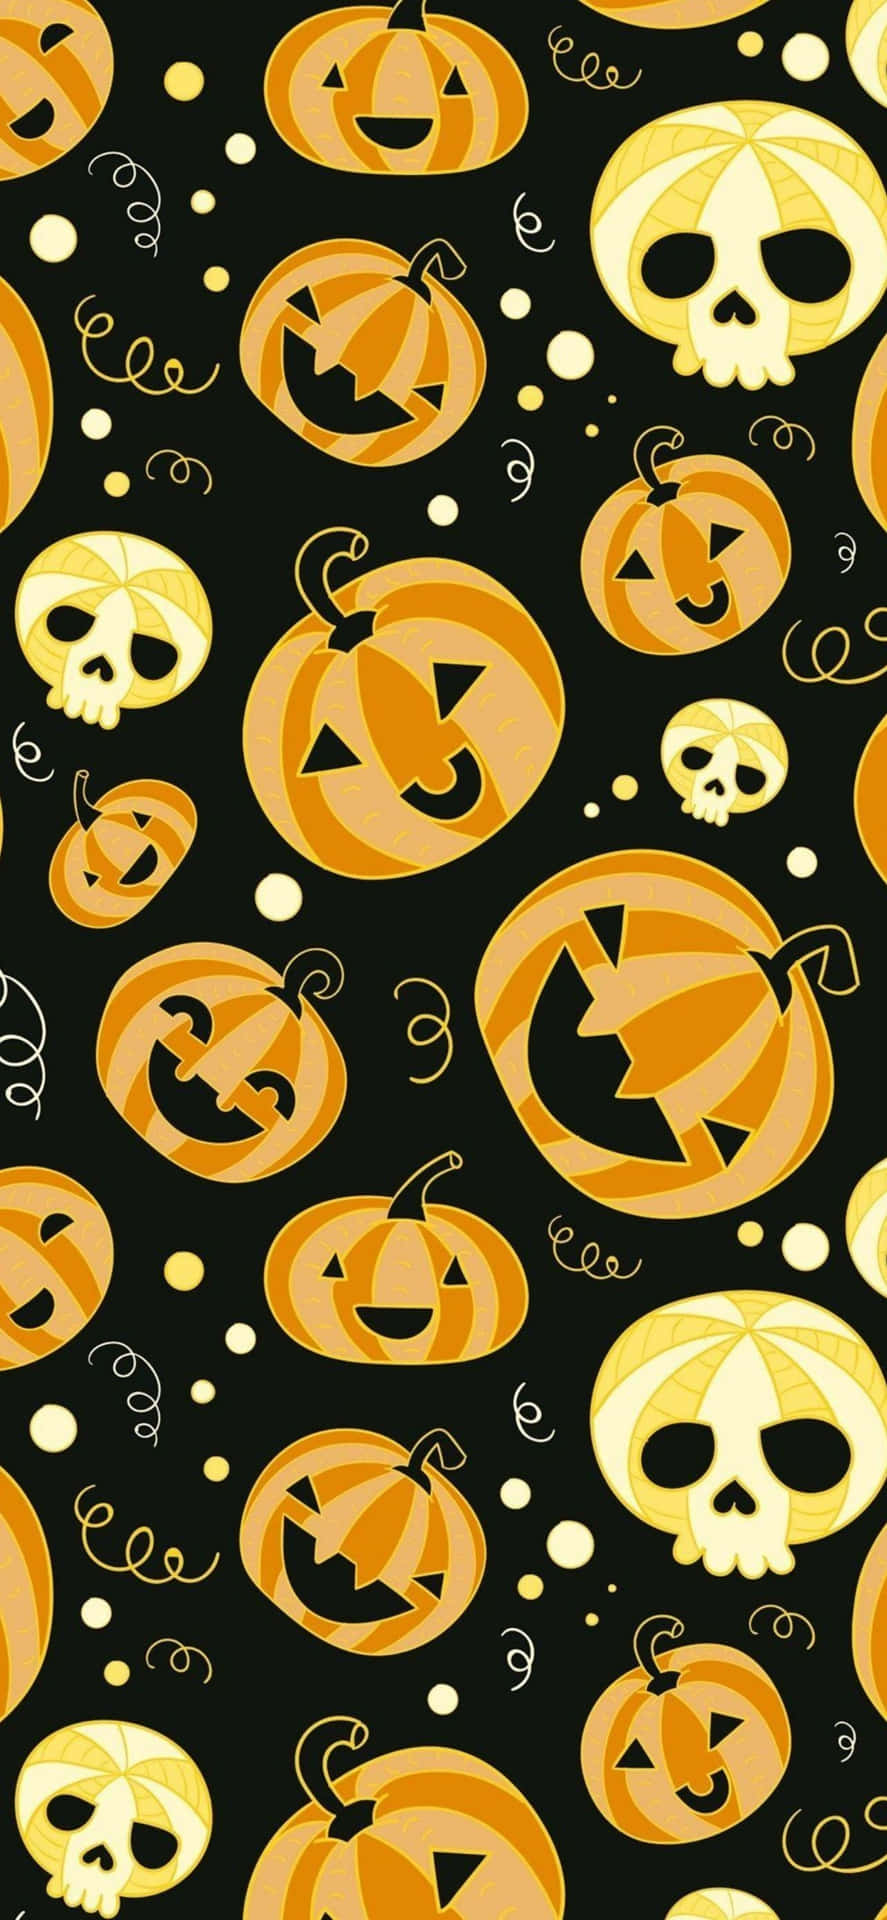 Enjoy the Spirited Fun of Halloween with an iPhone